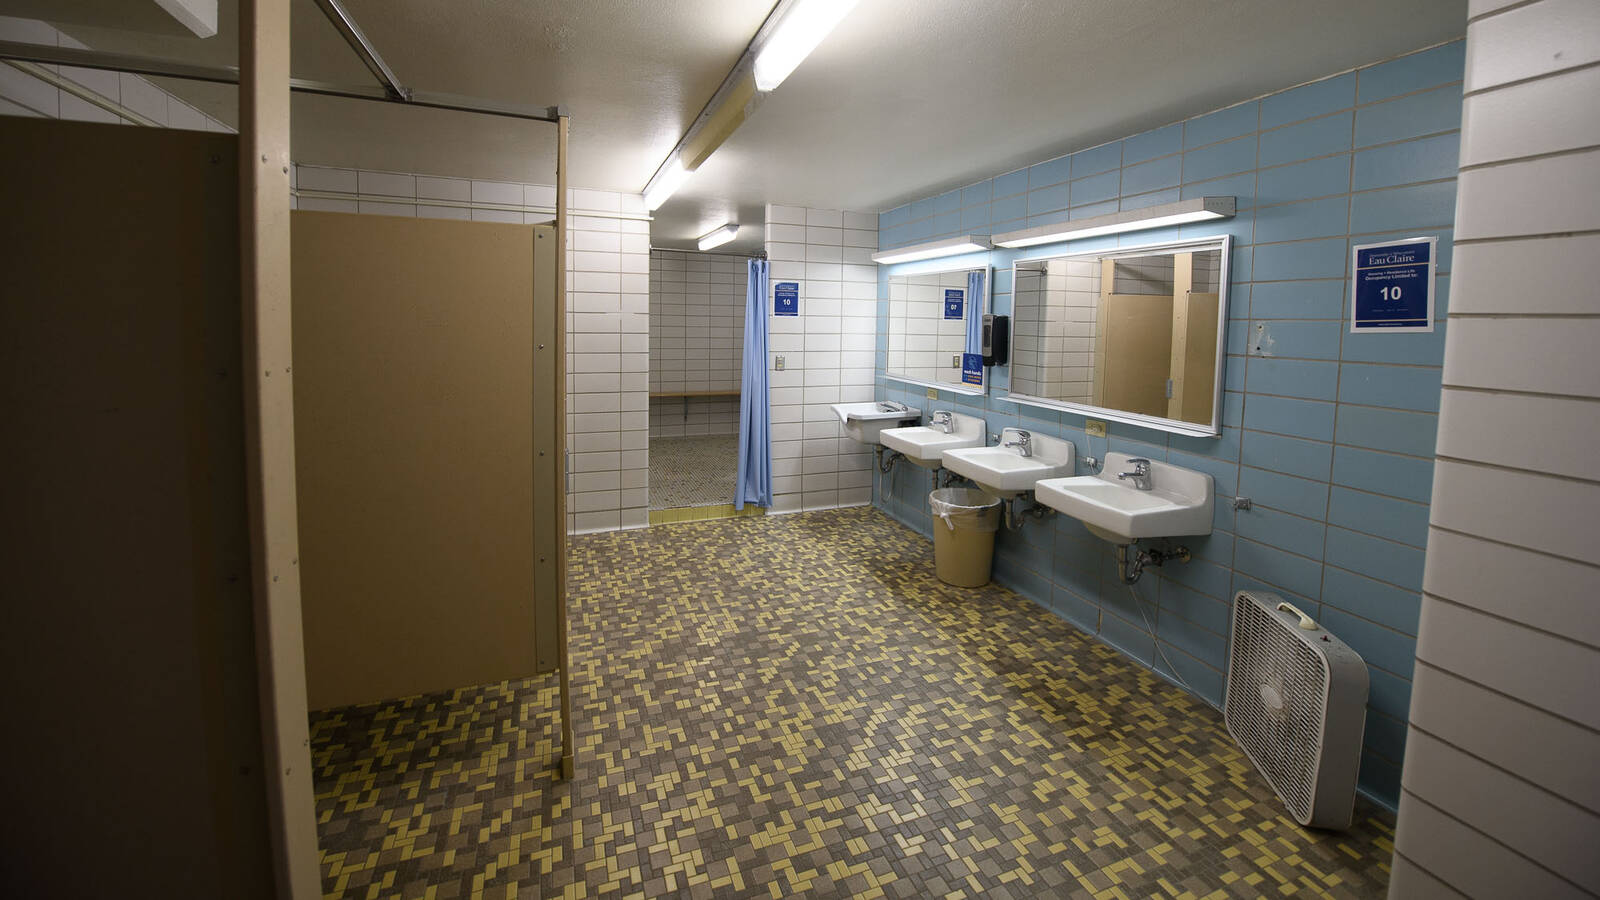 Murry Hall bathroom with sinks, stalls, showers, tiled floors.